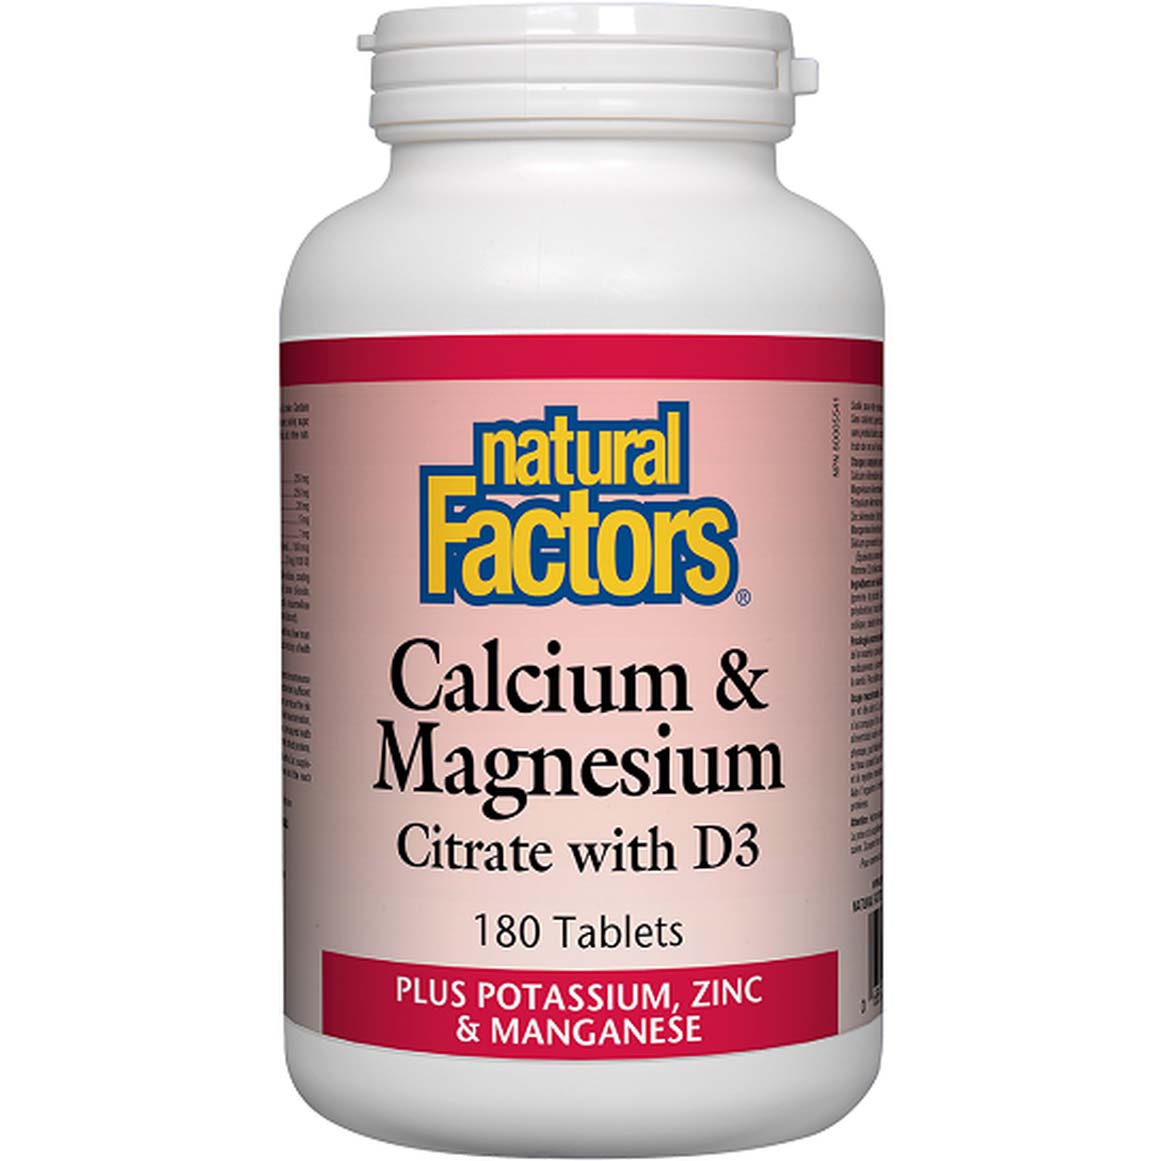 Natural Factors Calcium & Magnesium Citrate with D3 Plus Potassium, Zinc & Manganese, 180 Tablets